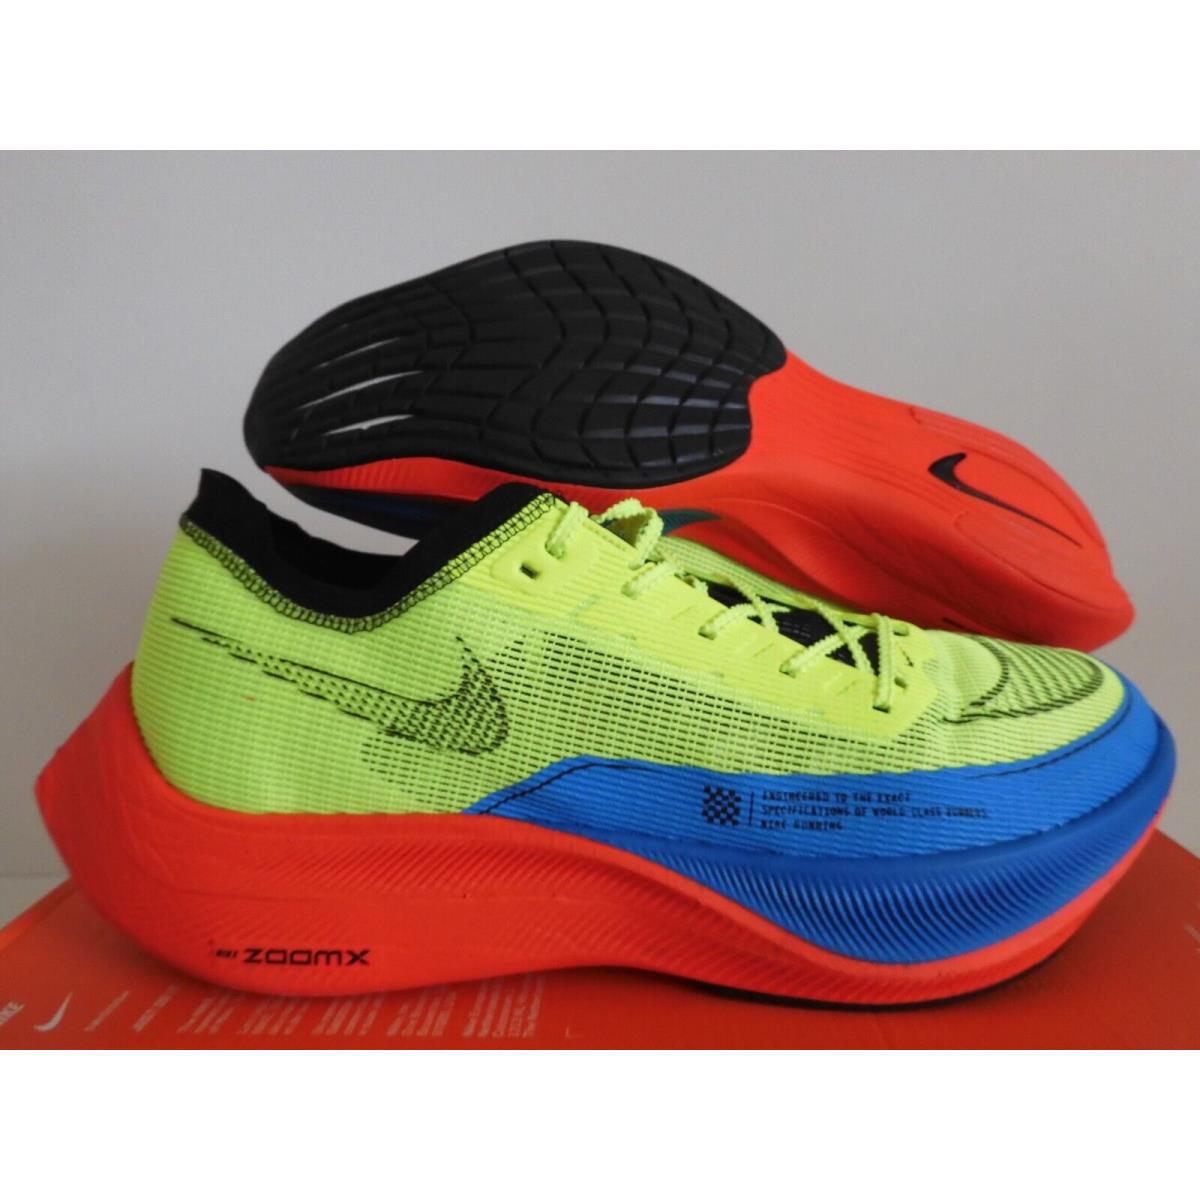 Nike Zoomx Vaporfly Next% 2 Volt-black Steve Prefontaine SZ 14 DV3030-700 - Green